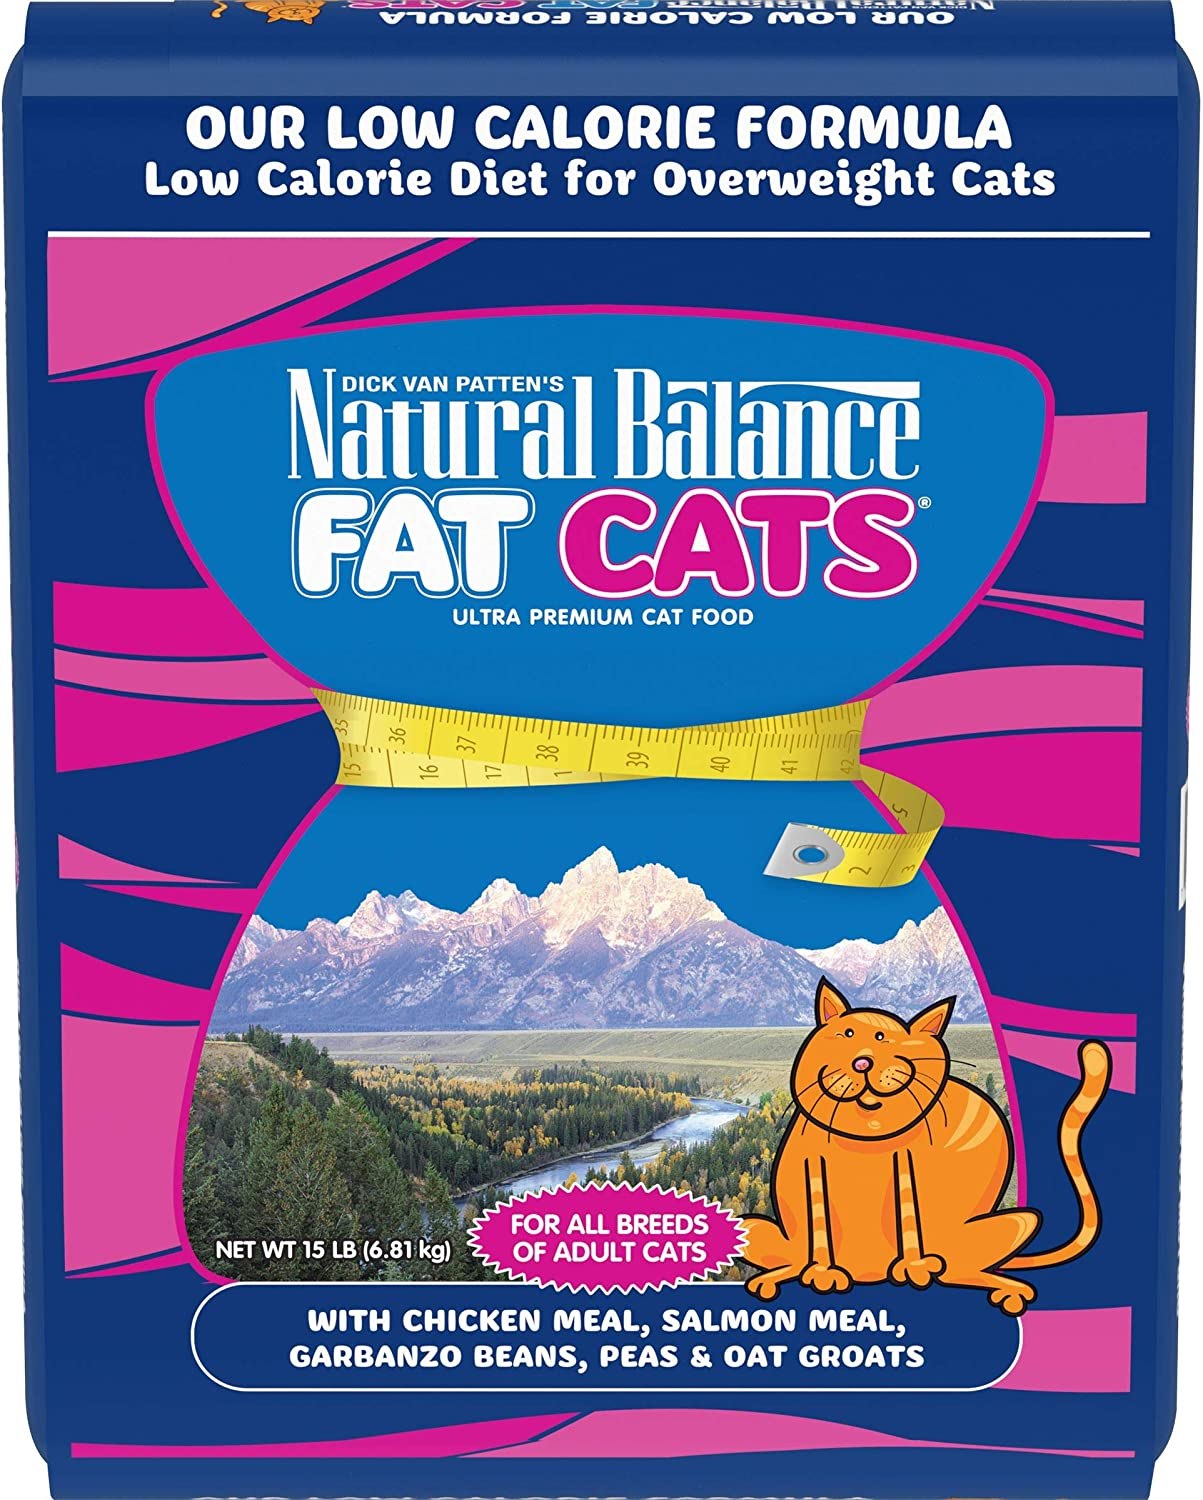 natural balance fat cats review